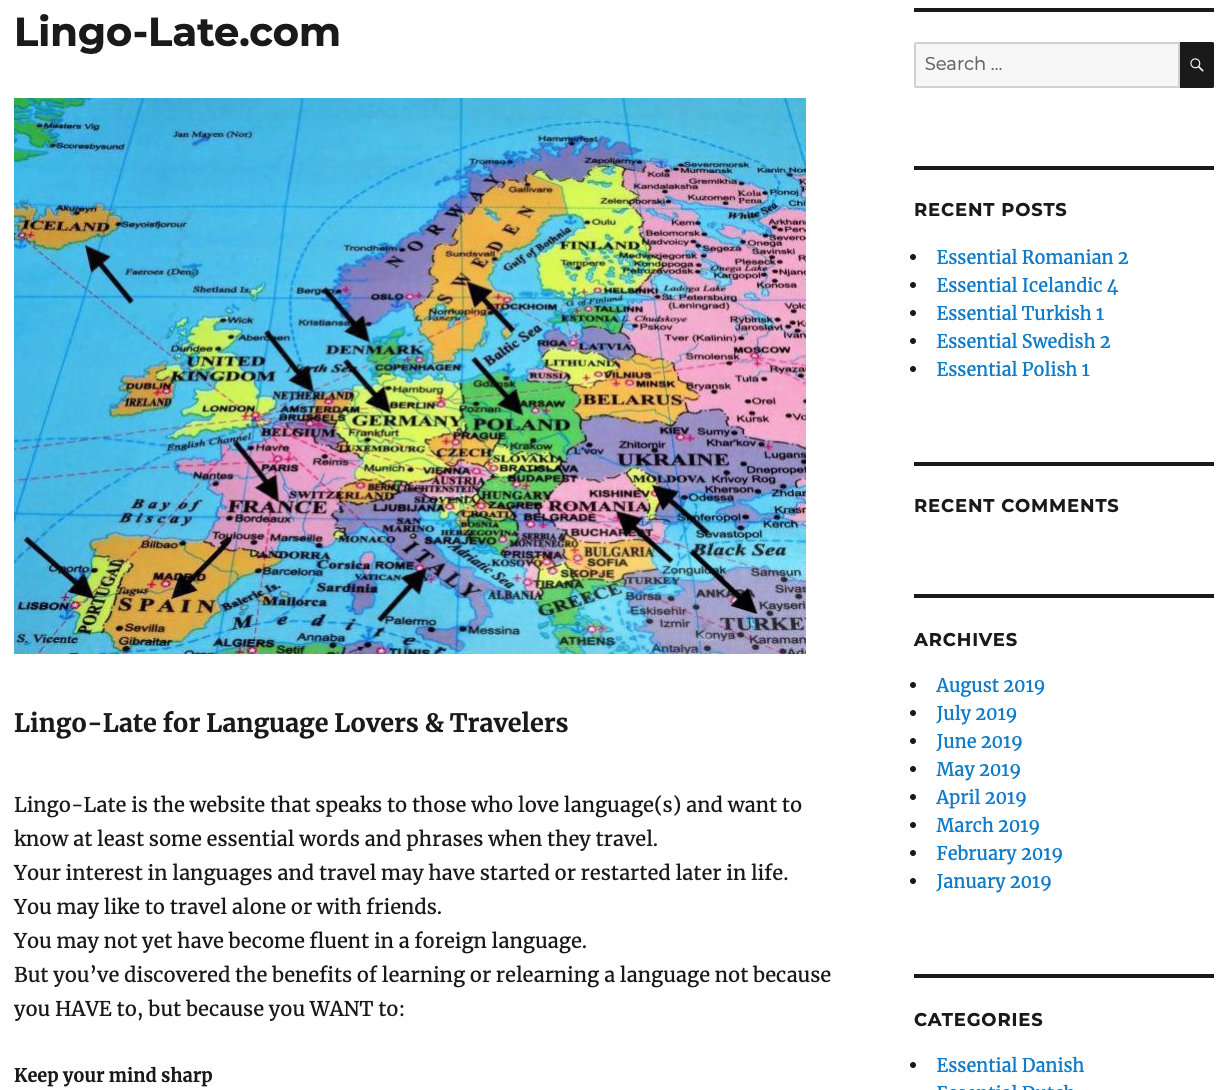 Home page of Lingo-late.com